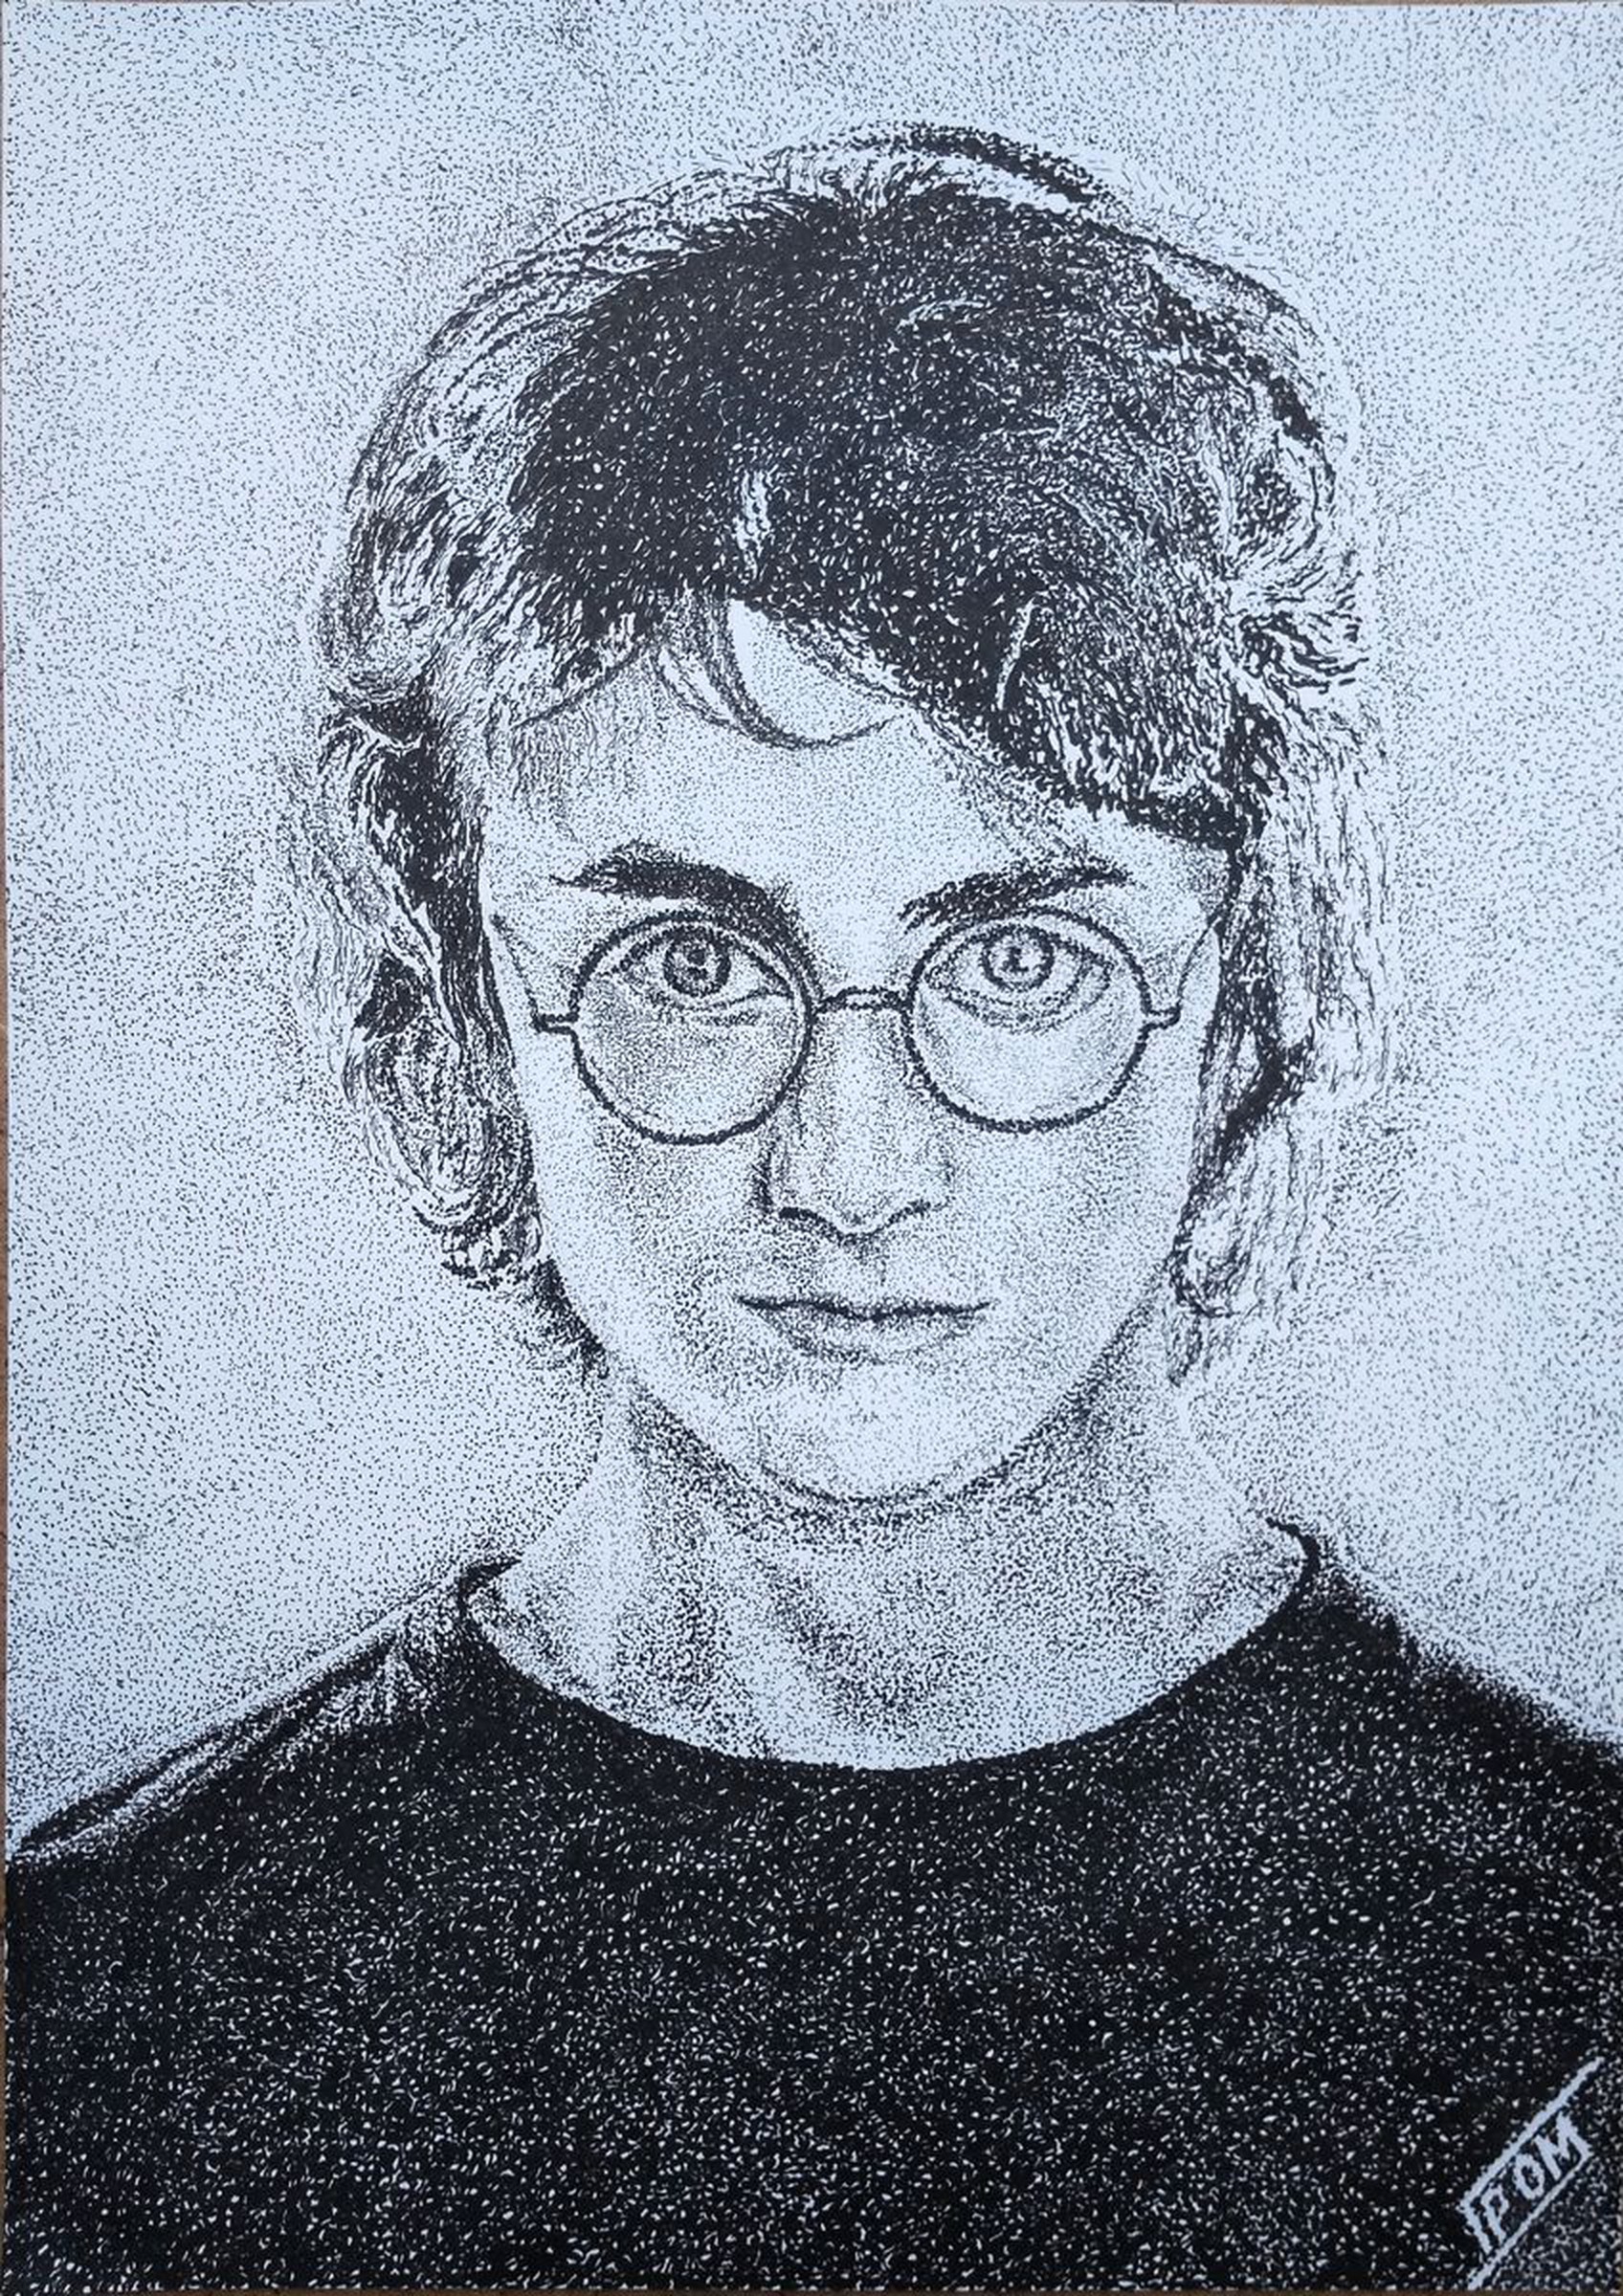 Harry Potter Portrait Original Pointillism Art Artfinder